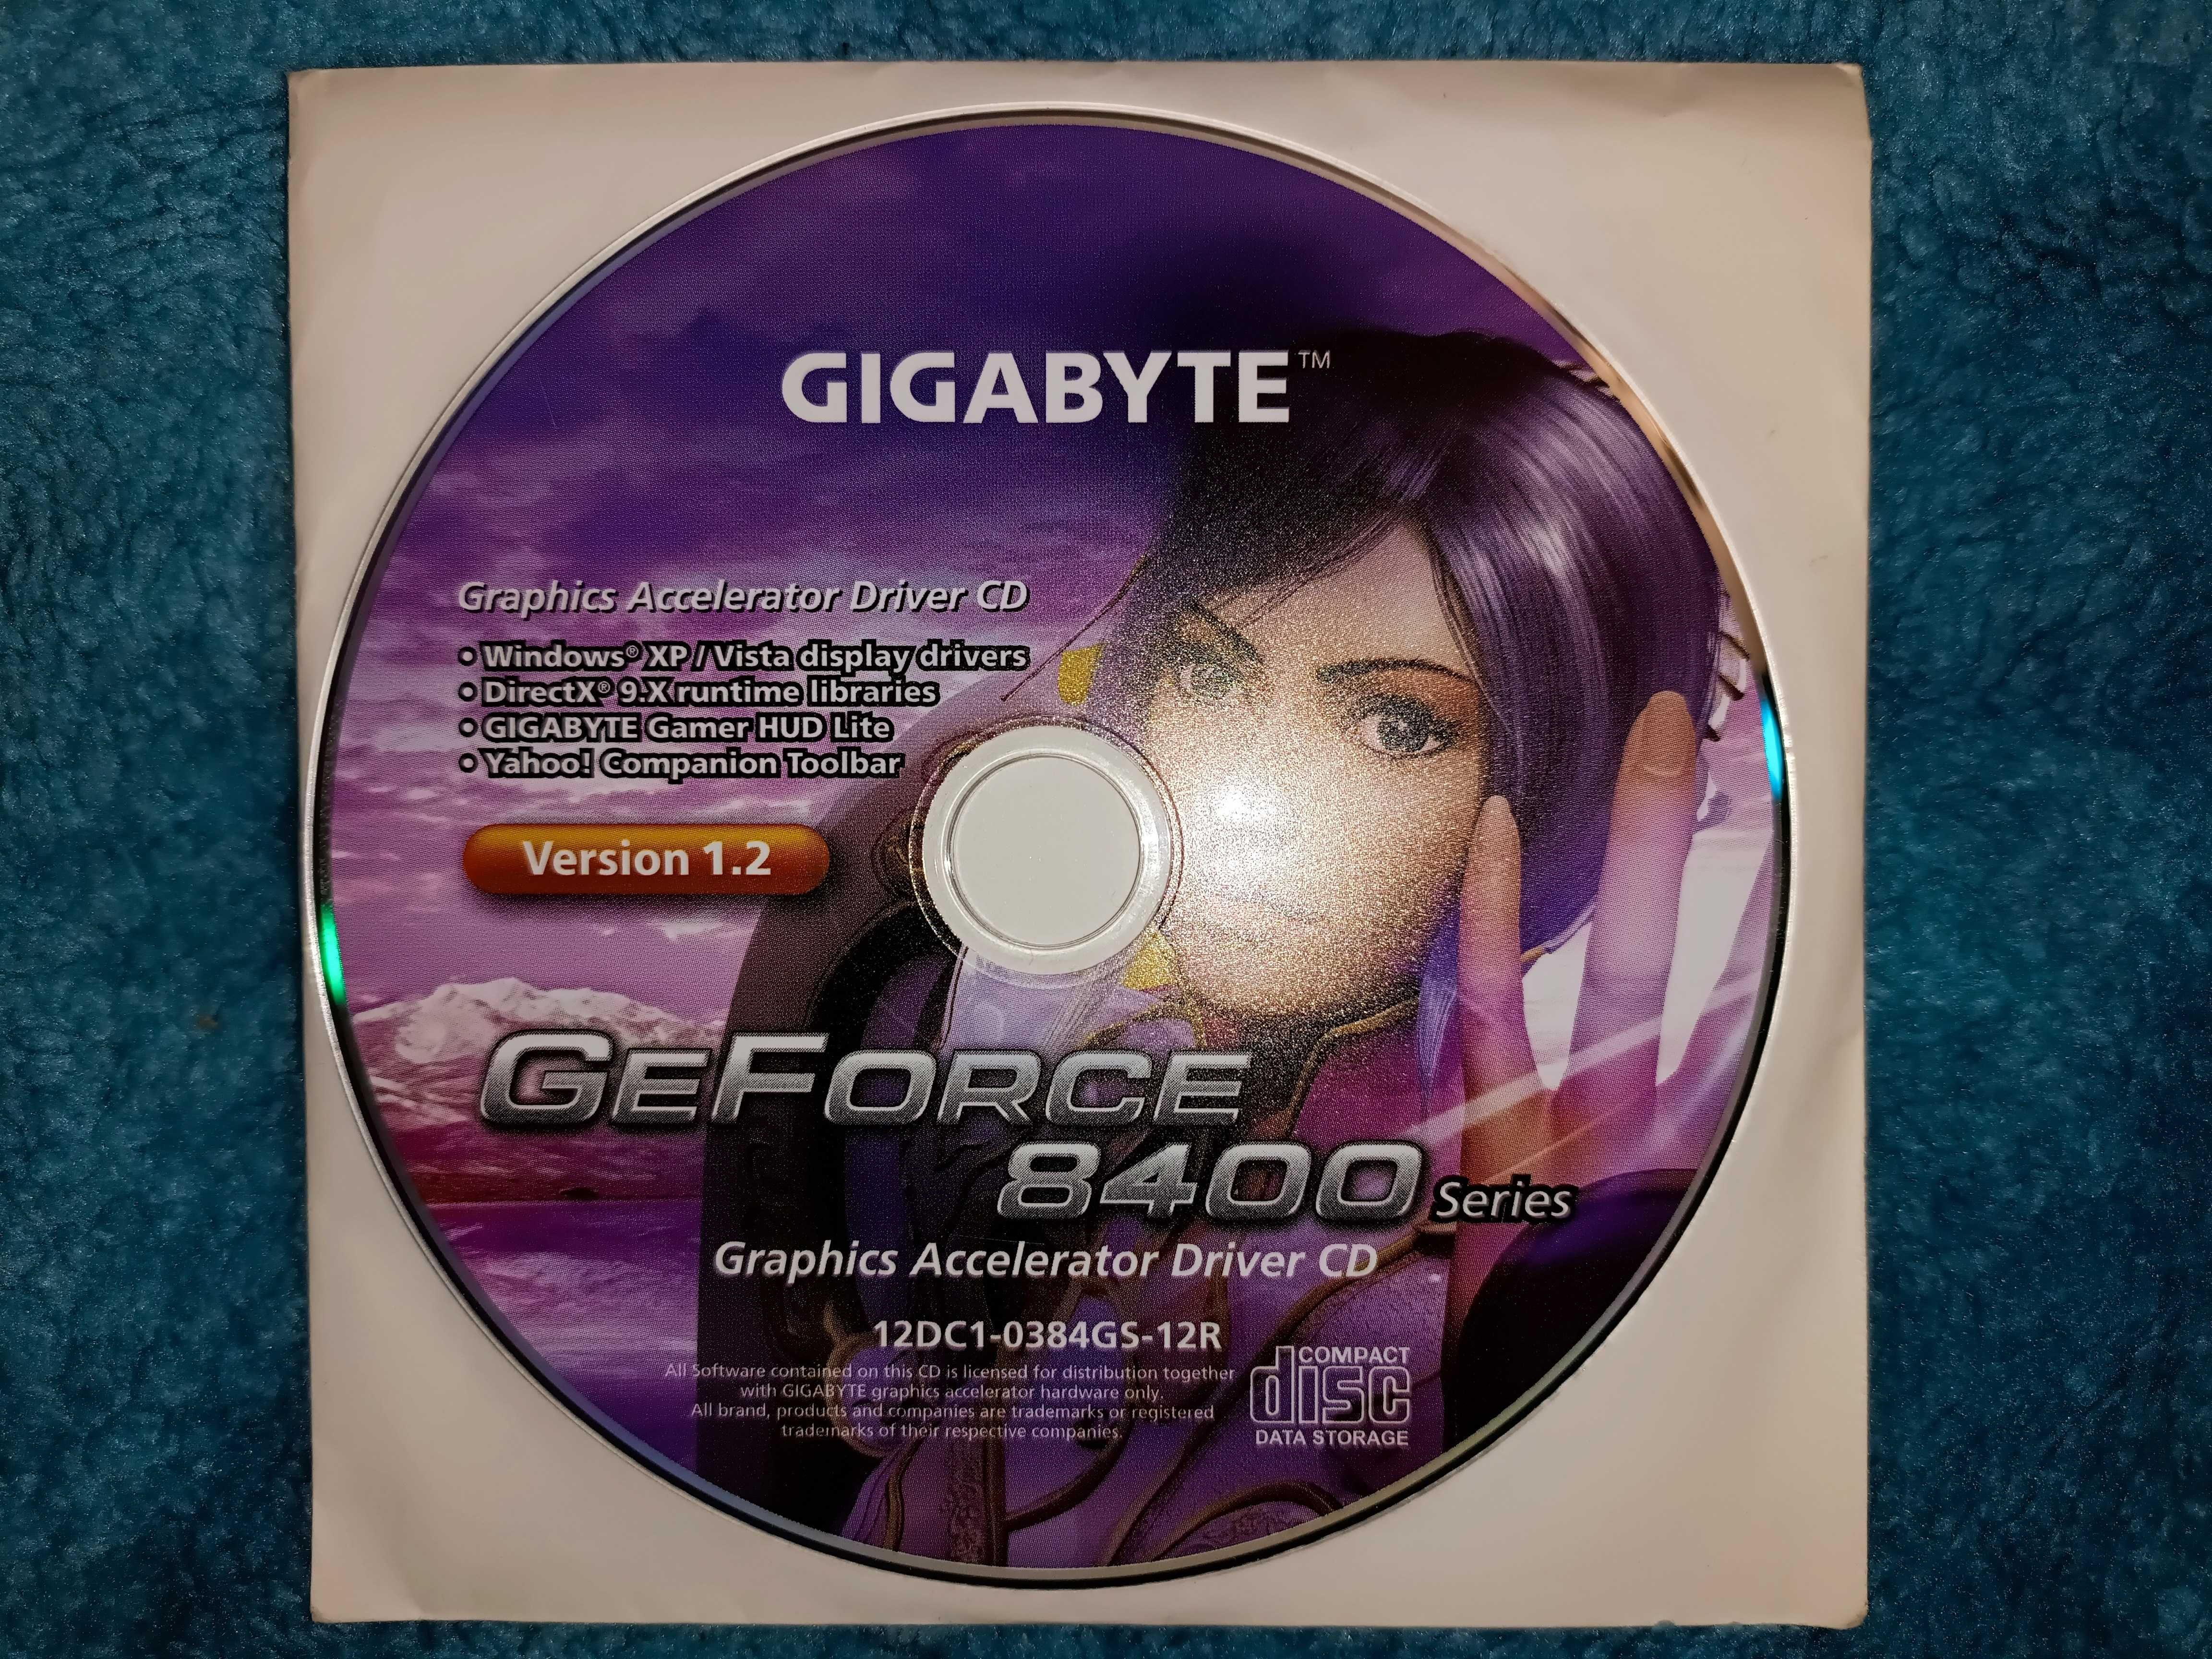 GIGABYTE GeForce 8400 Series – Graphics Accelerator Driver CD